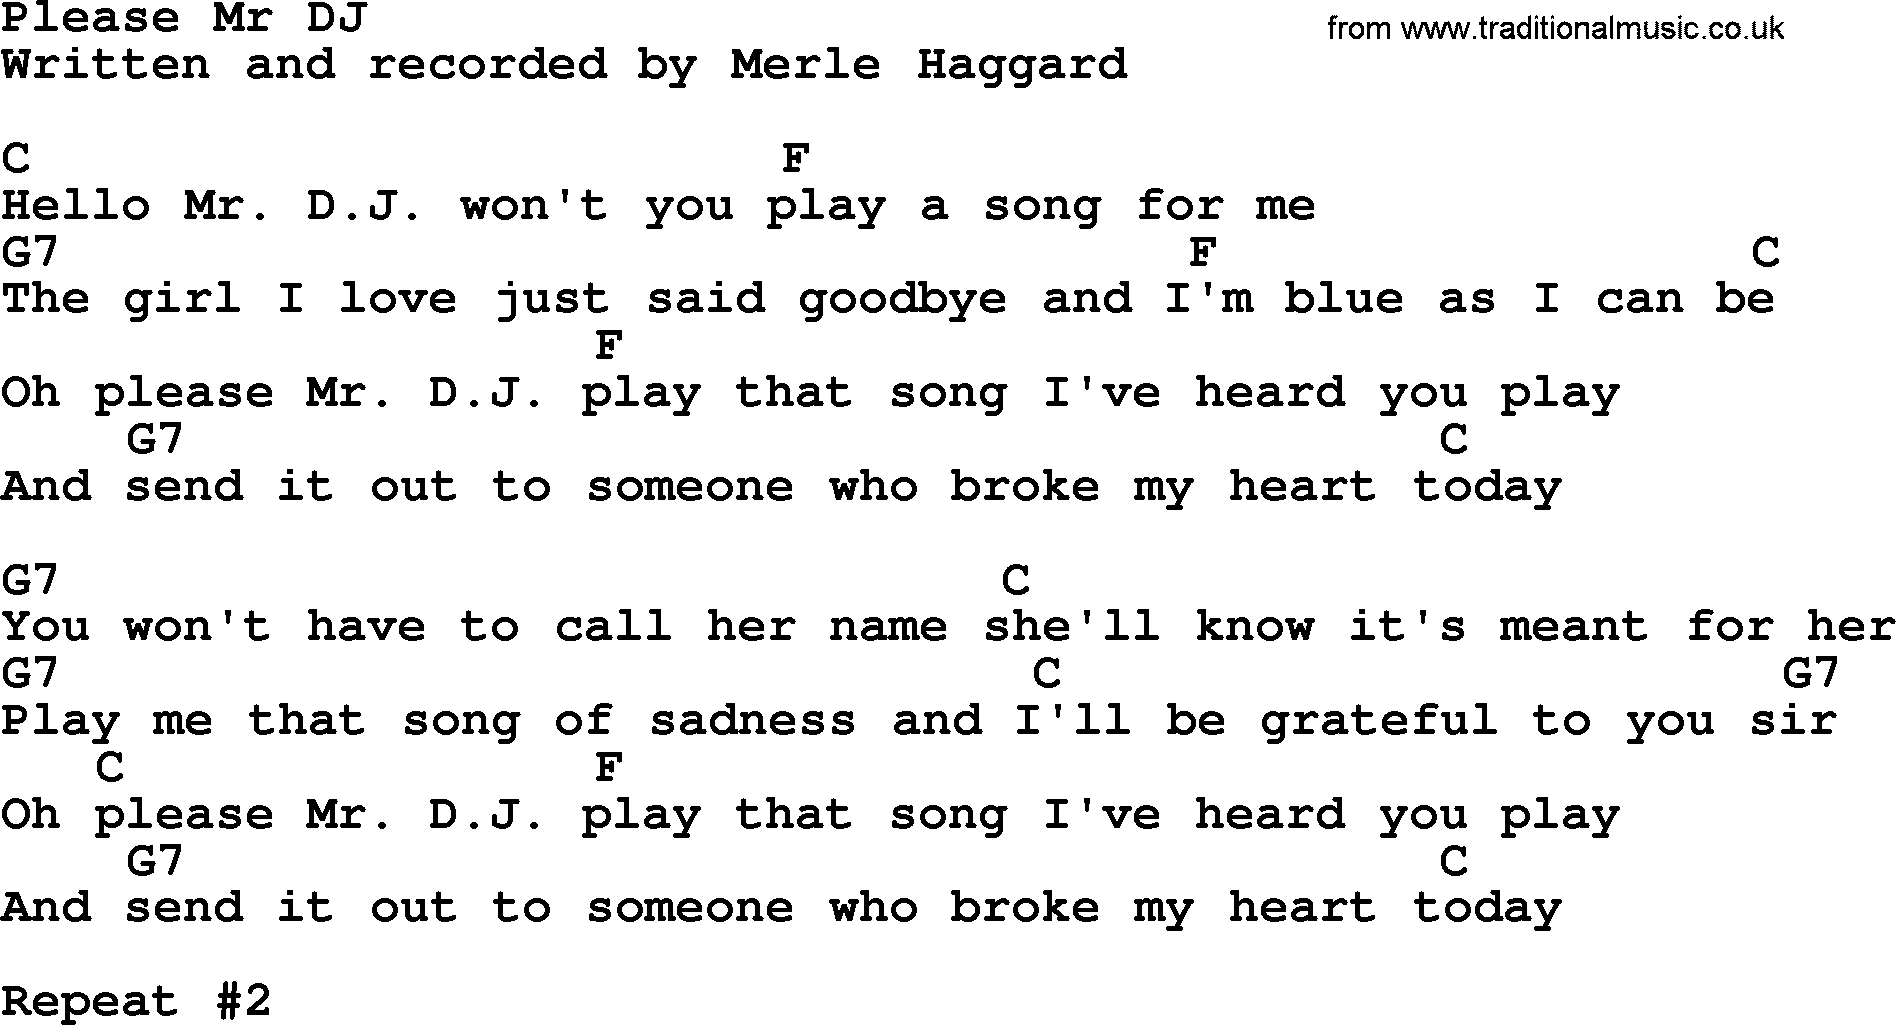 Merle Haggard song: Please Mr DJ, lyrics and chords